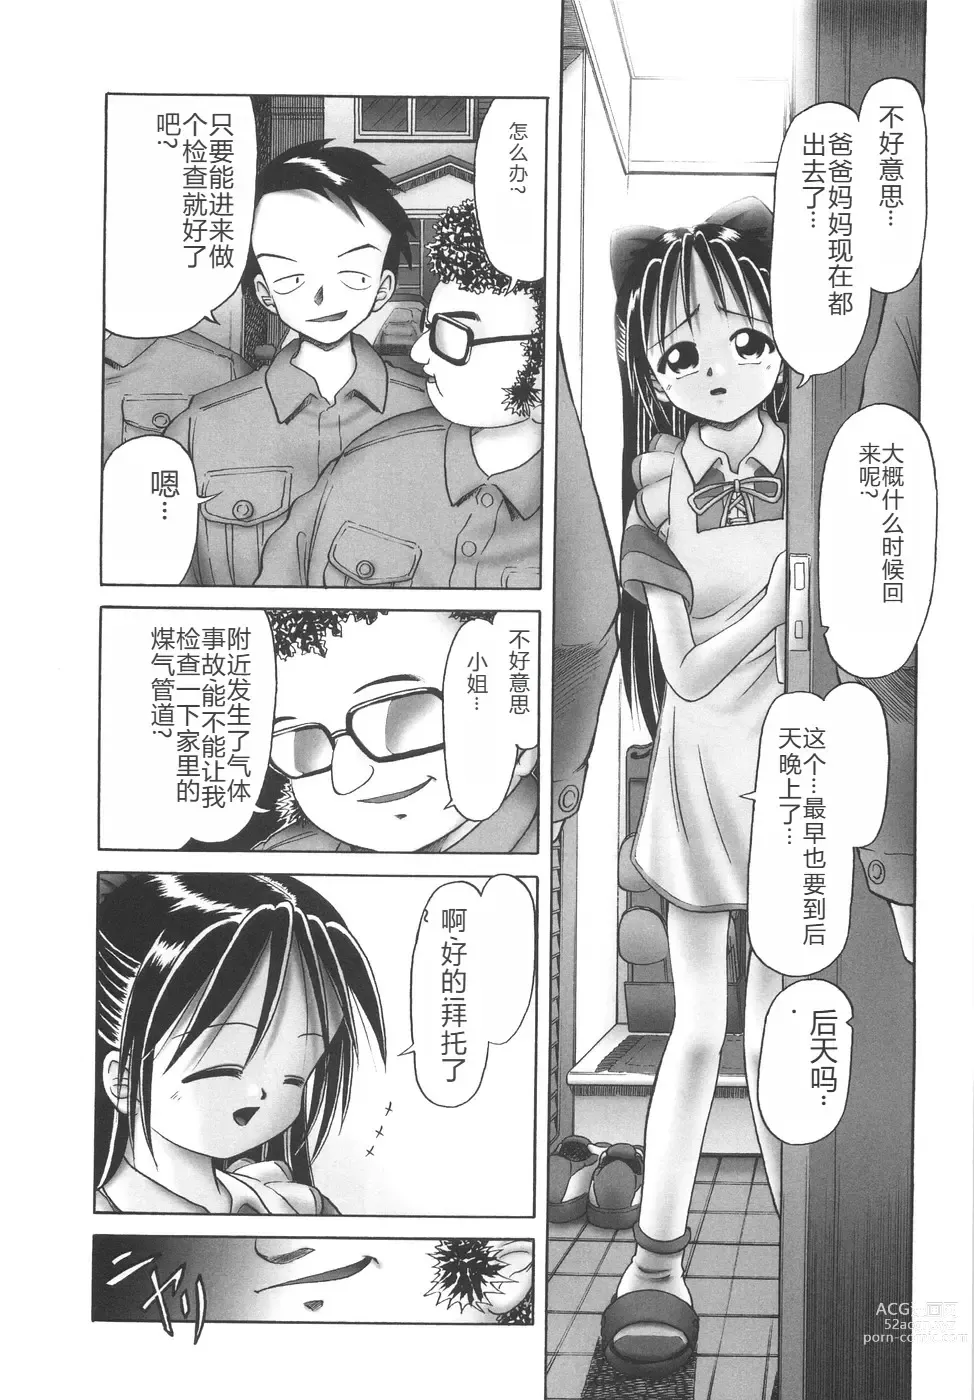 Page 14 of manga Hitoribocchi no Orusuban